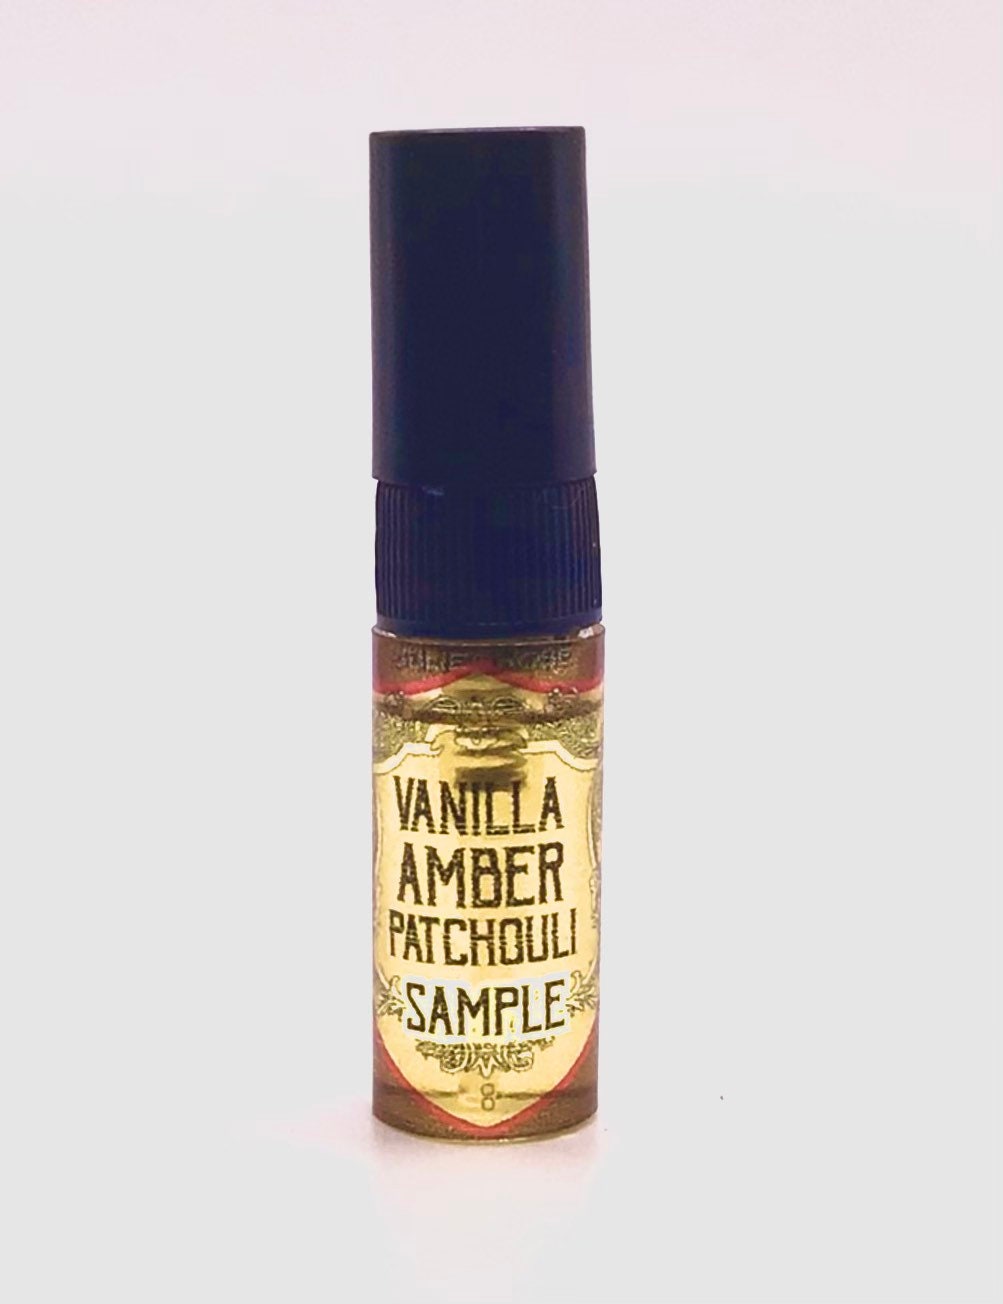 VANILLA MUSK IMPORTED Perfume Oil / Alcohol-free / Cruelty-free / Roll on  Bottle / Unisex / Perfume Travel Bottle / Parfumerie Scent Aroma 